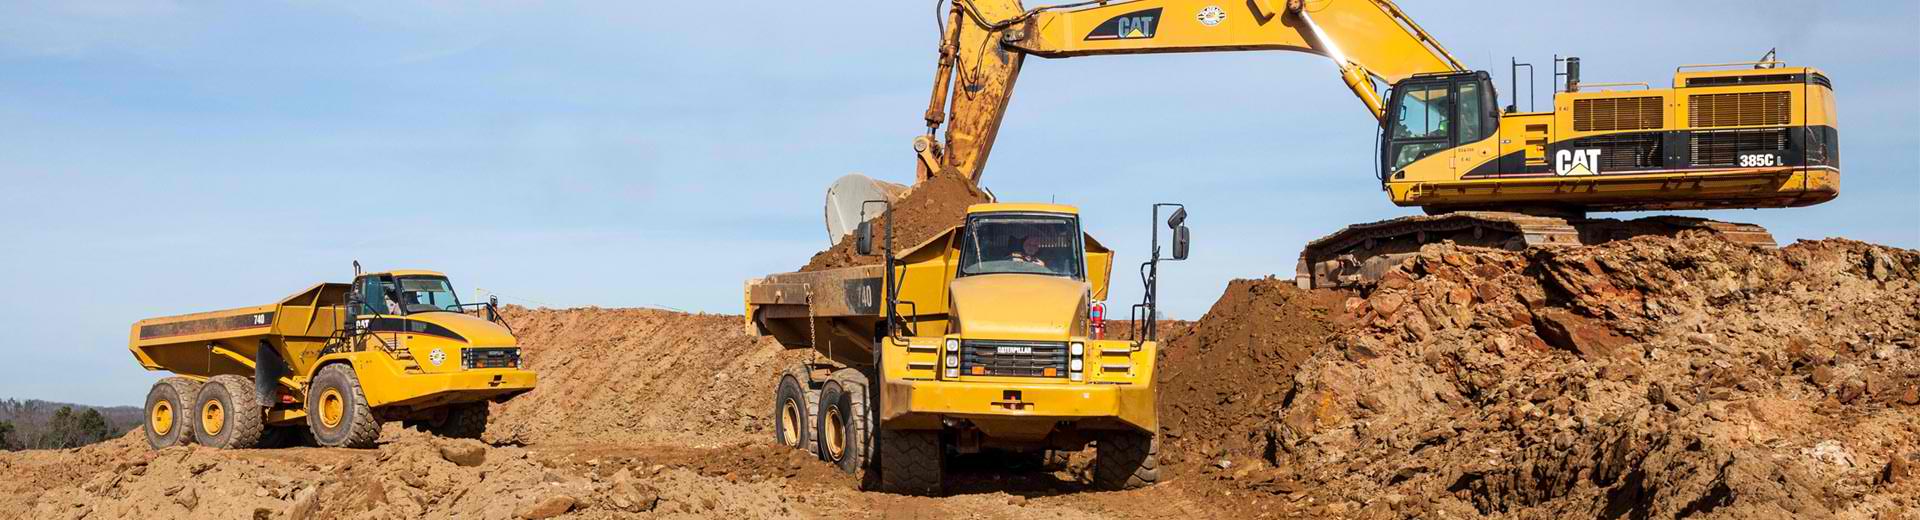 Excavator Operator Job FIFO 3/1 roster Mining Site Pilbara-iMINCO.net Mining Information